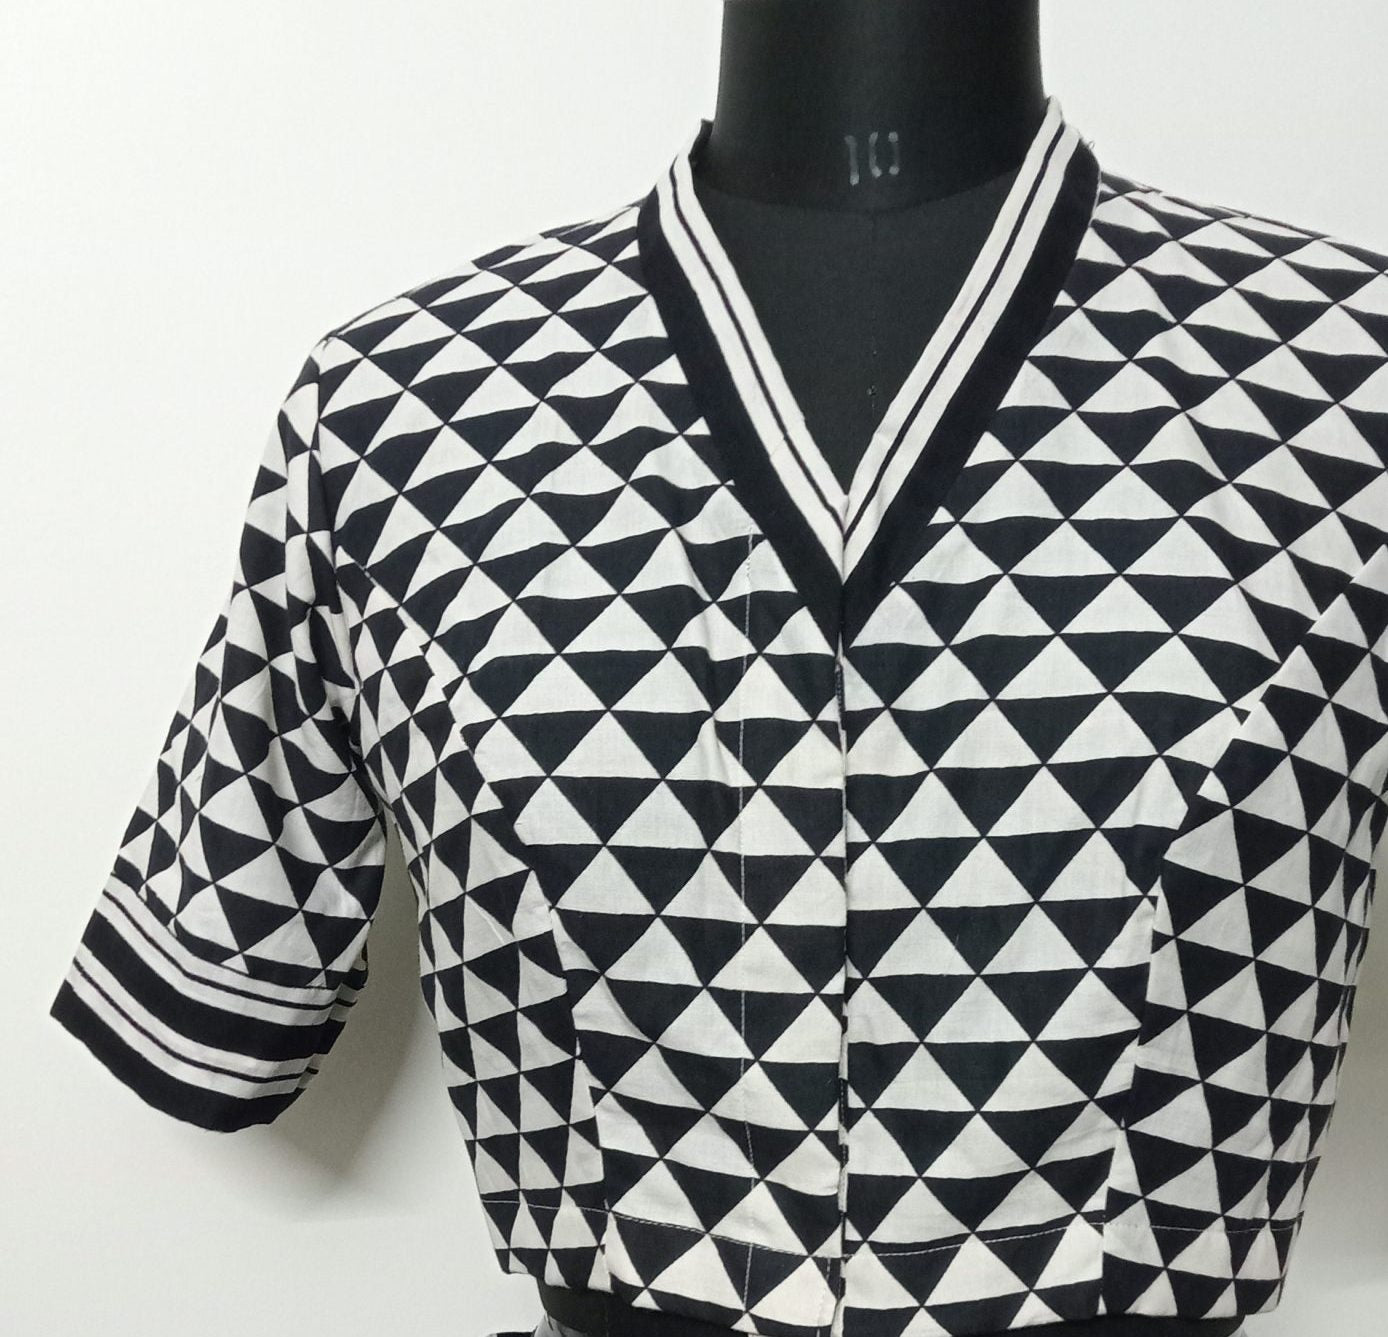 Monochrome triangular geometric print black and white blouse